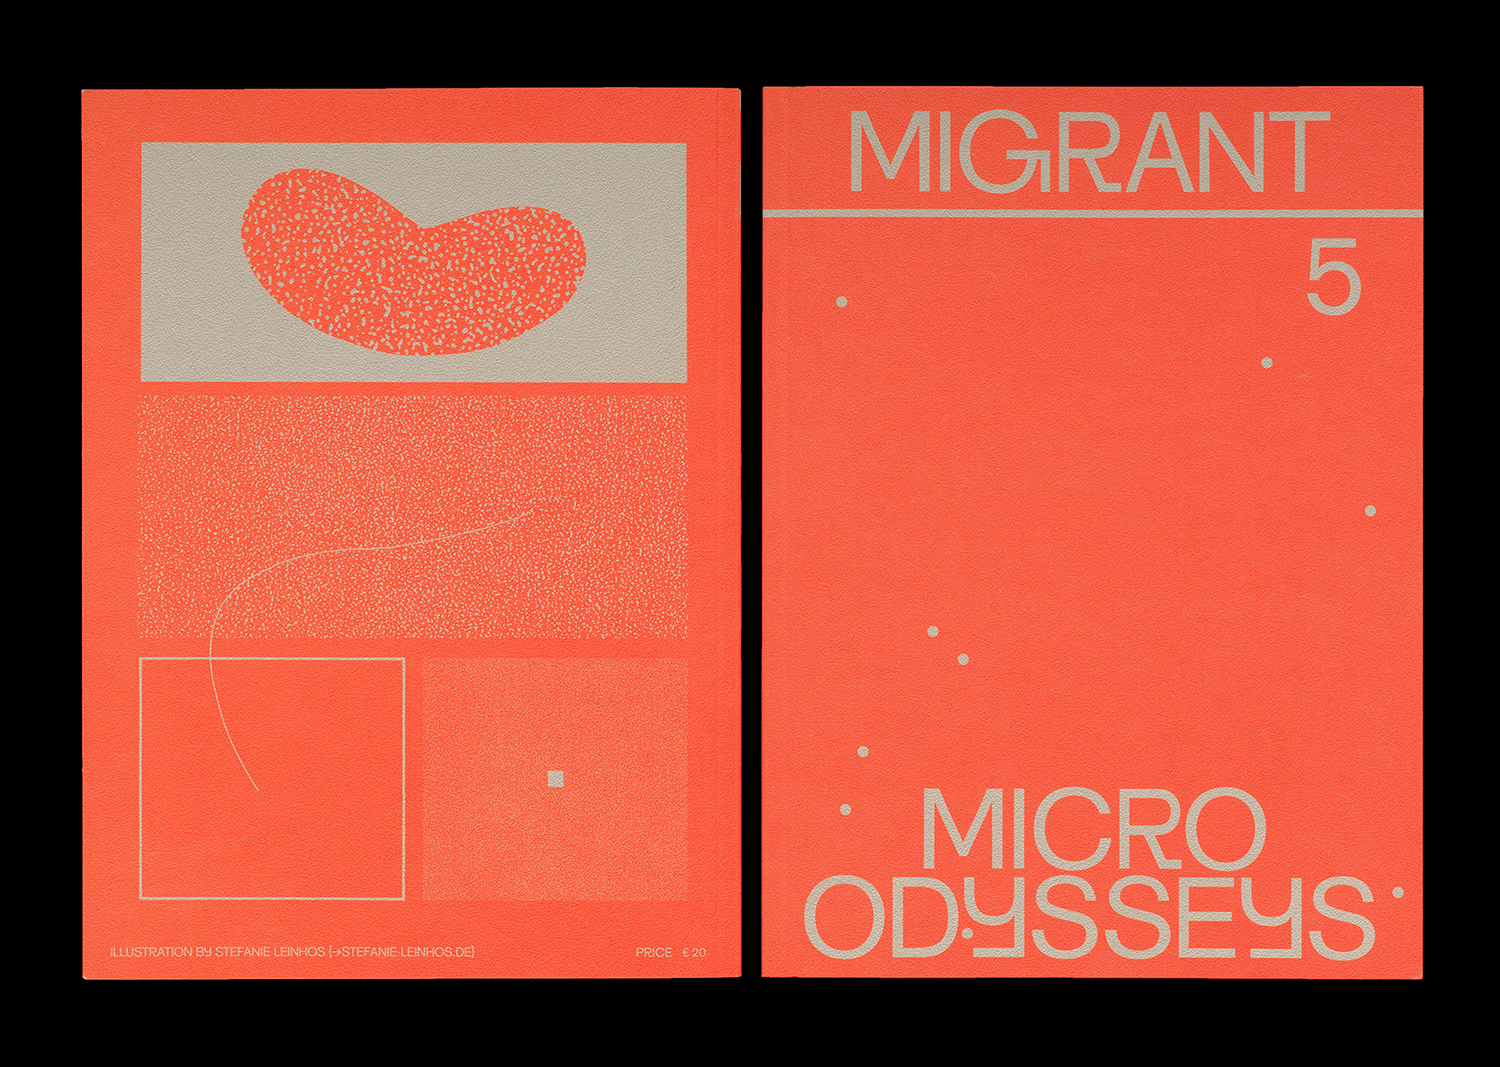 Material Thinking in Branding — Migrant Journal No.5 by Offshore Studio, Switzerland